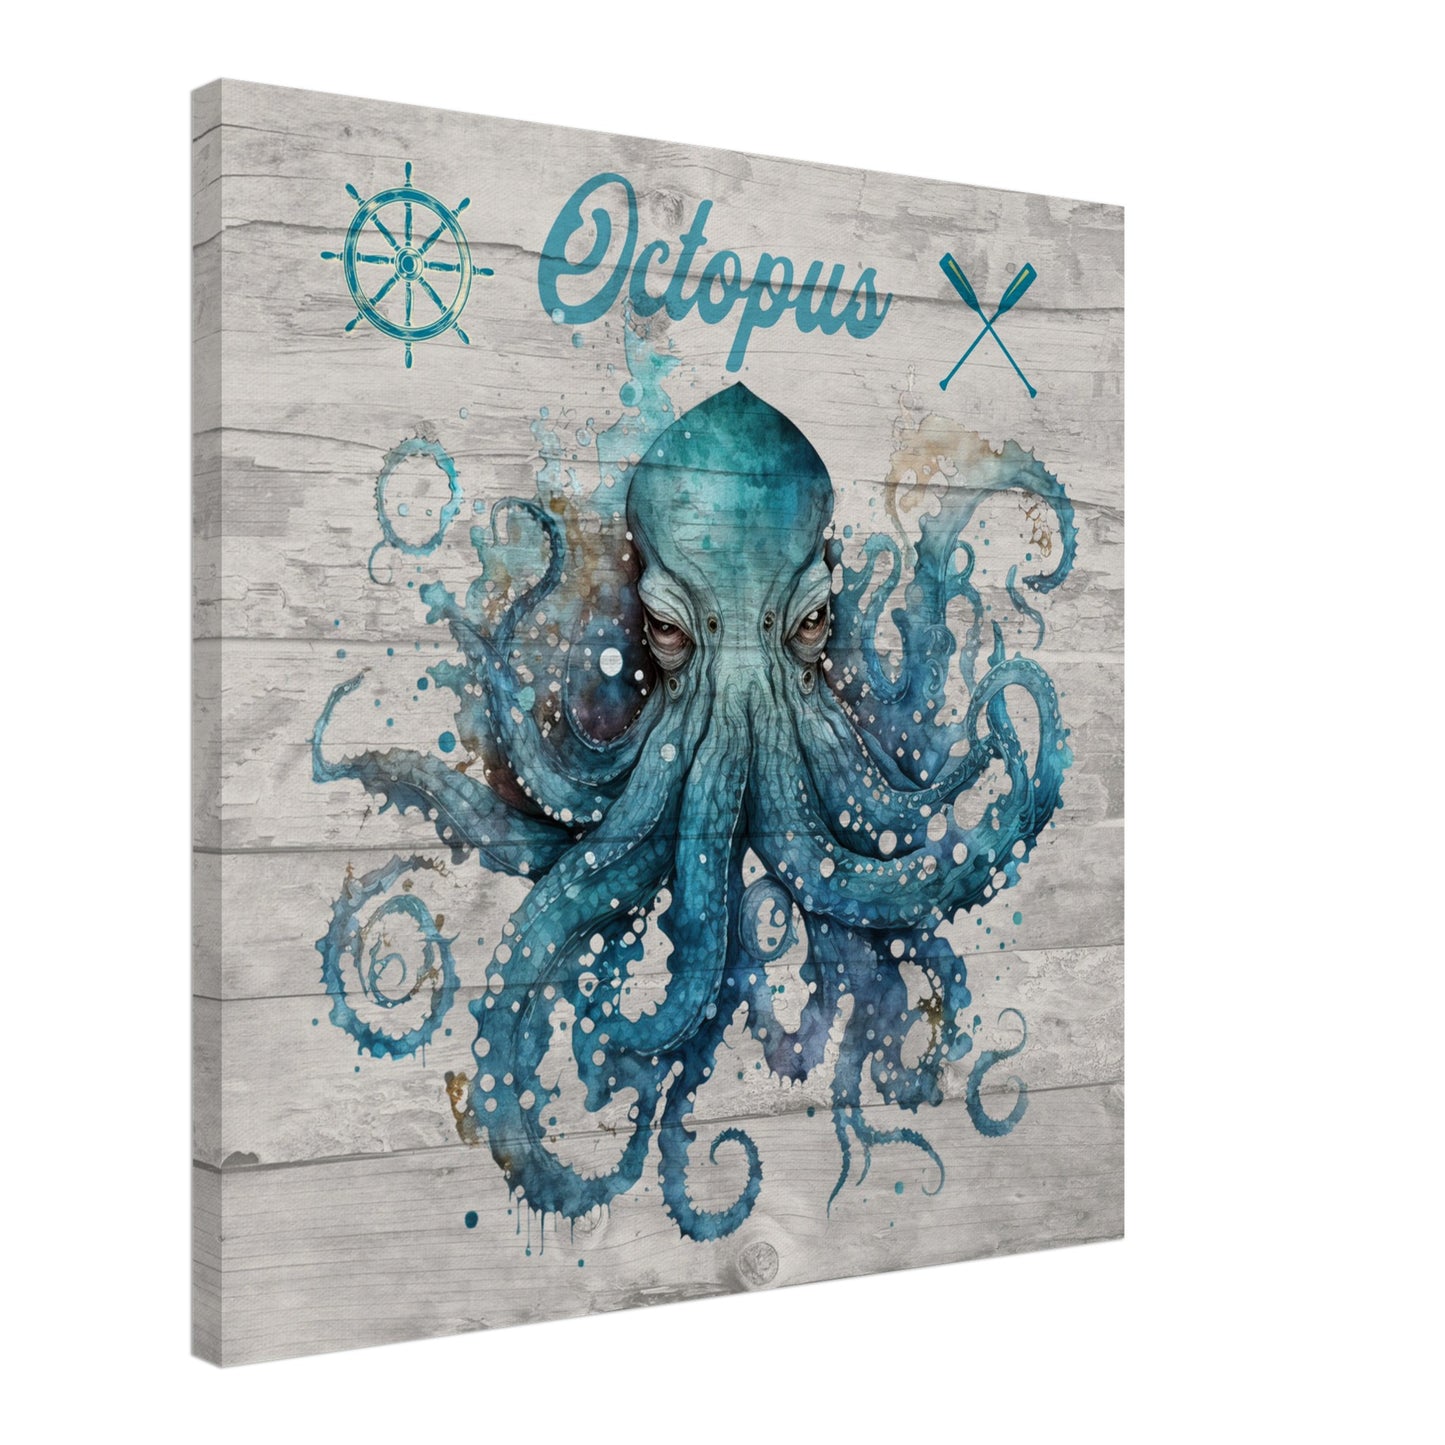 Octopus Canvas Wall Print - Caribbean Rays